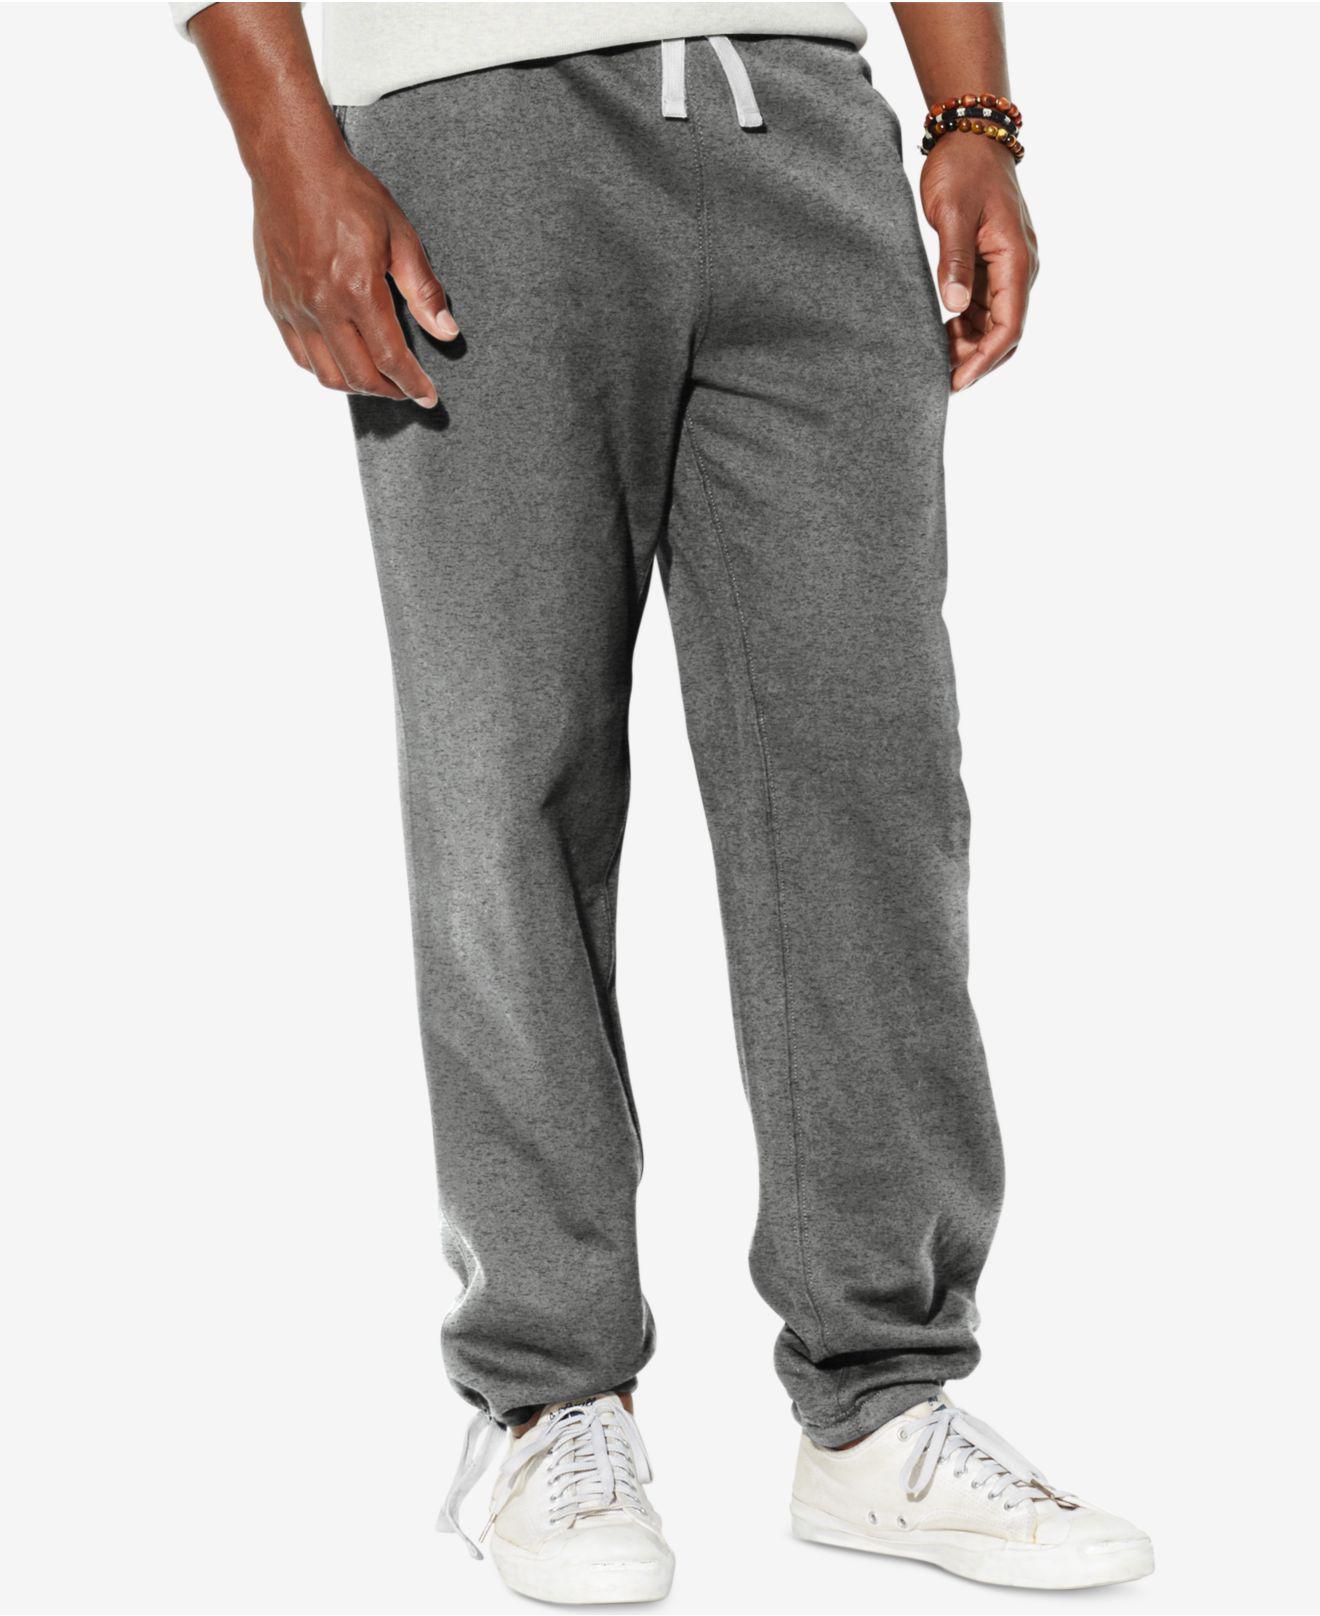 Polo Ralph Lauren Big Tall Classic Fleece Drawstring Pants in Grey (Gray)  for Men - Lyst